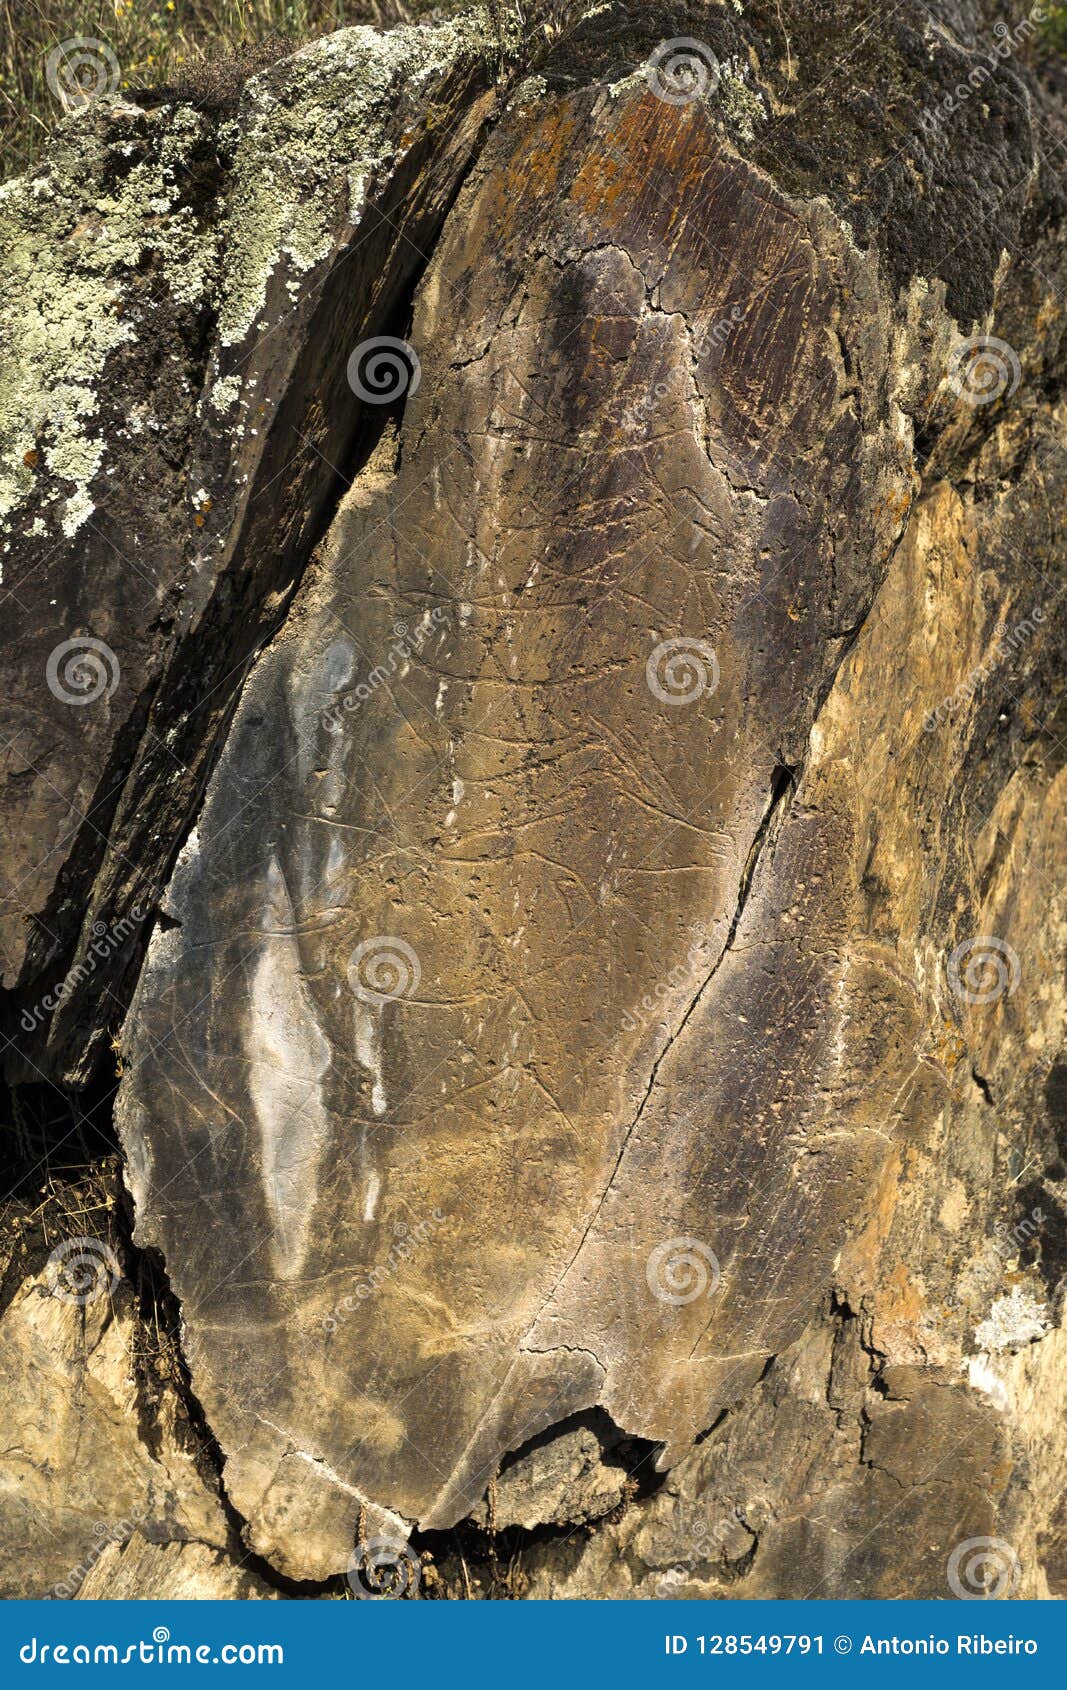 coa river Ã¢â¬â prehistoric rock engravings